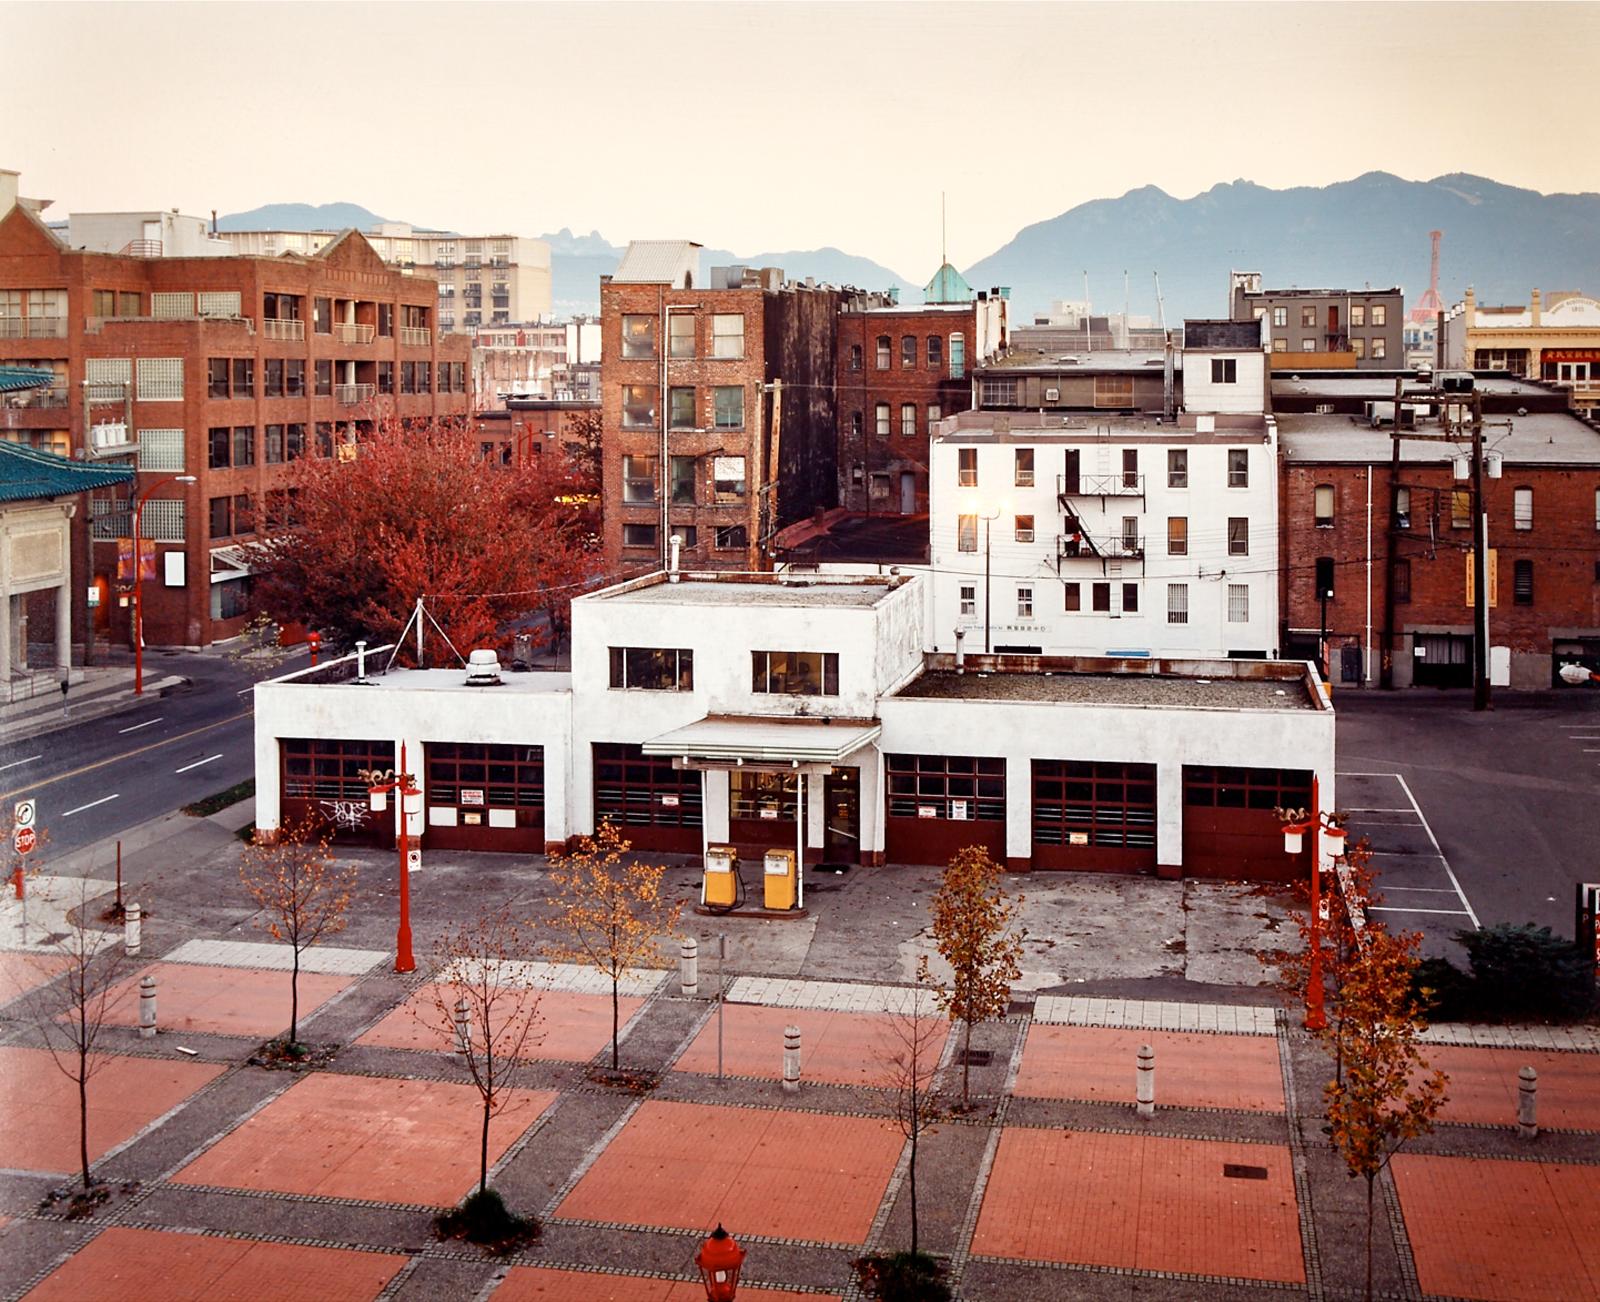 Scott Conarroe (1974) - China Town Station, Vancouver, 2003